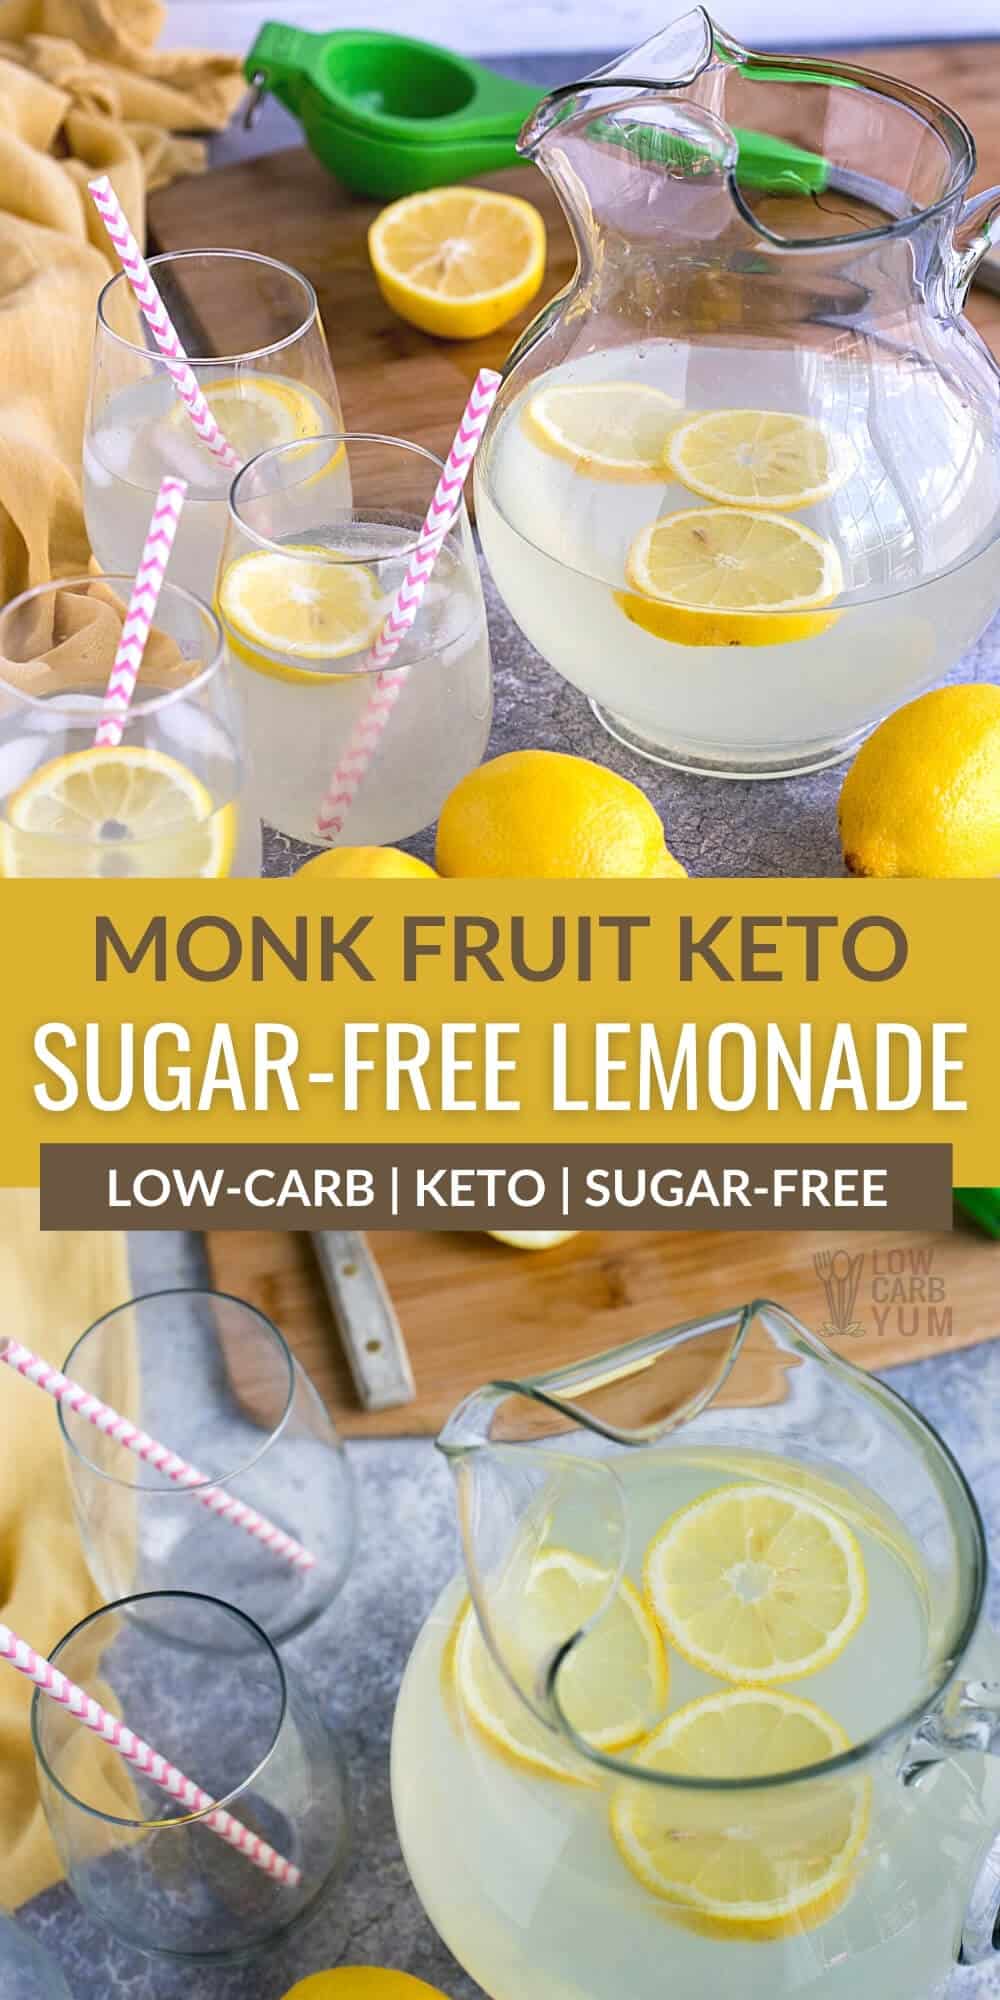 monk fruit sugar-free lemonade Pinterest image